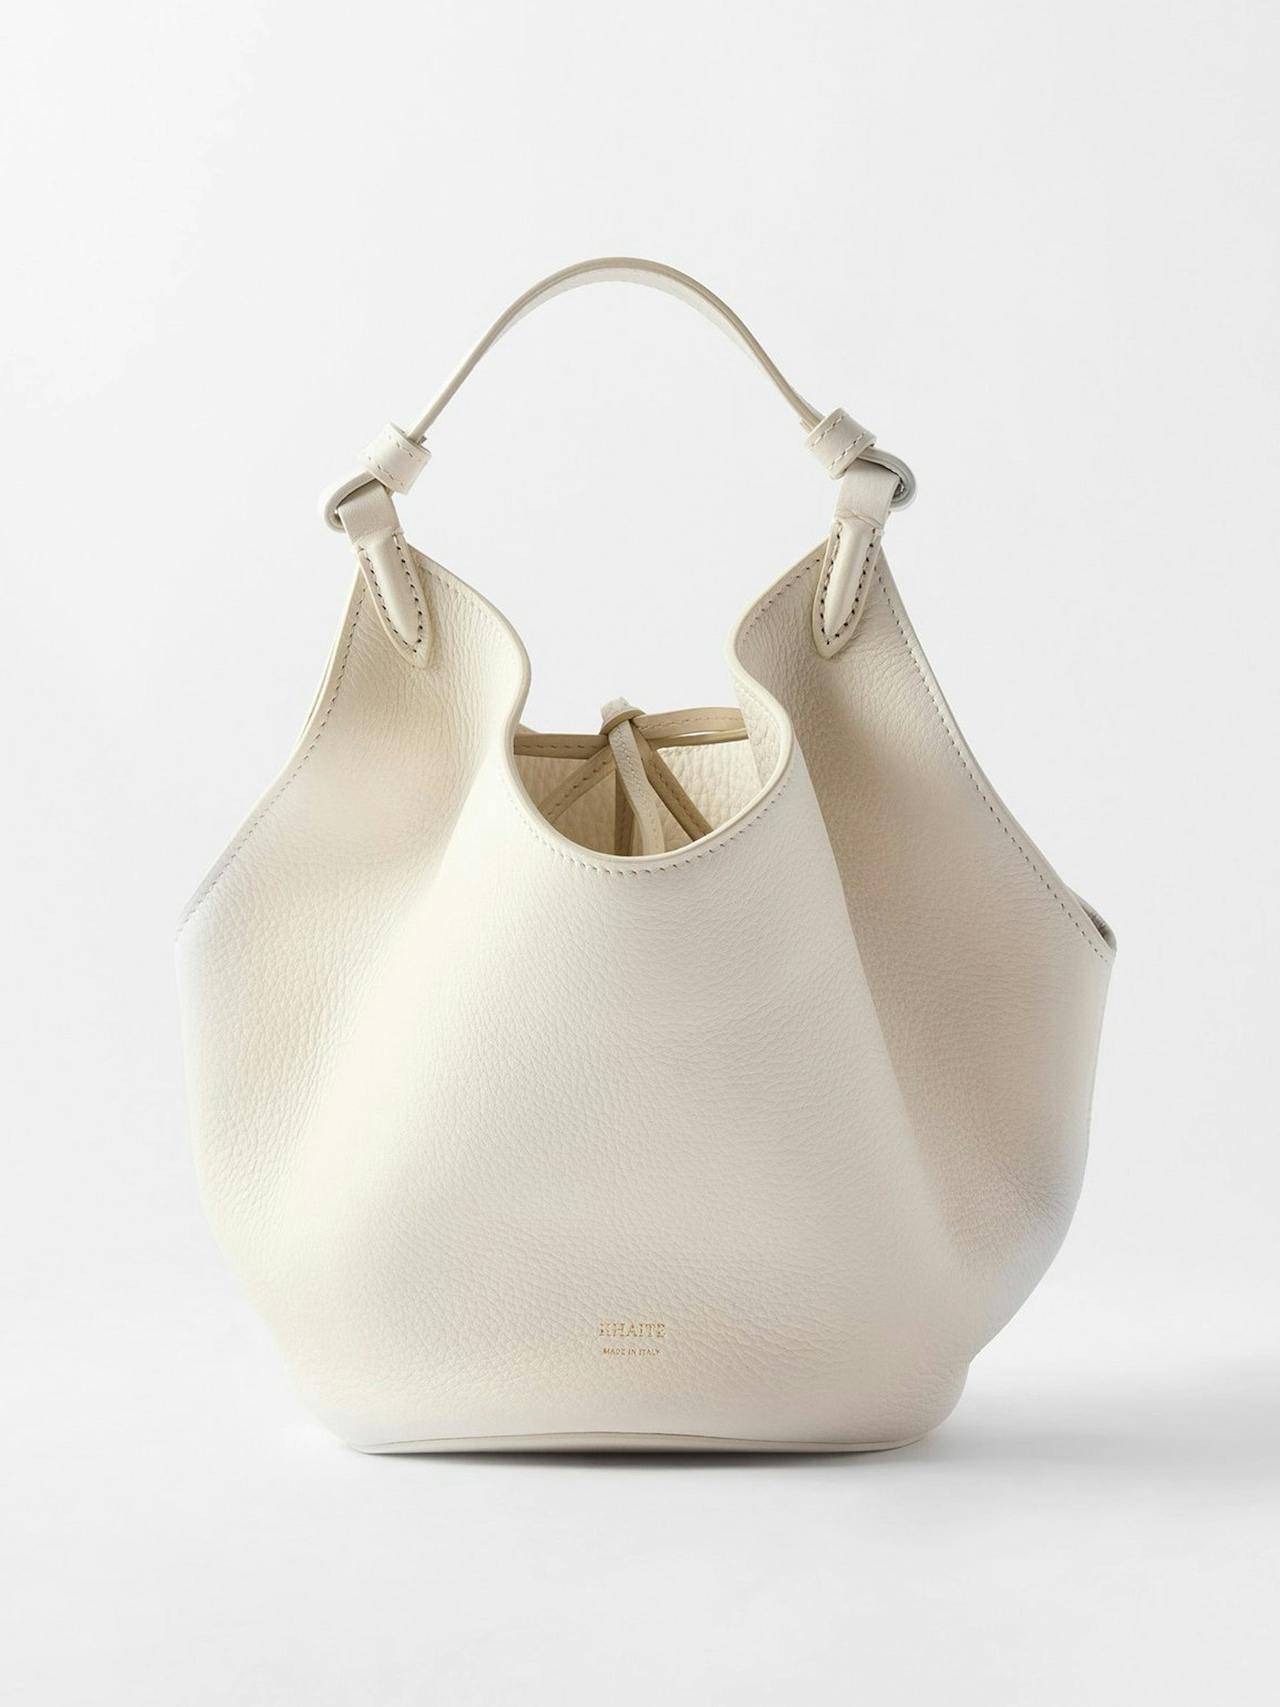 Lotus mini leather handbag in Ivory